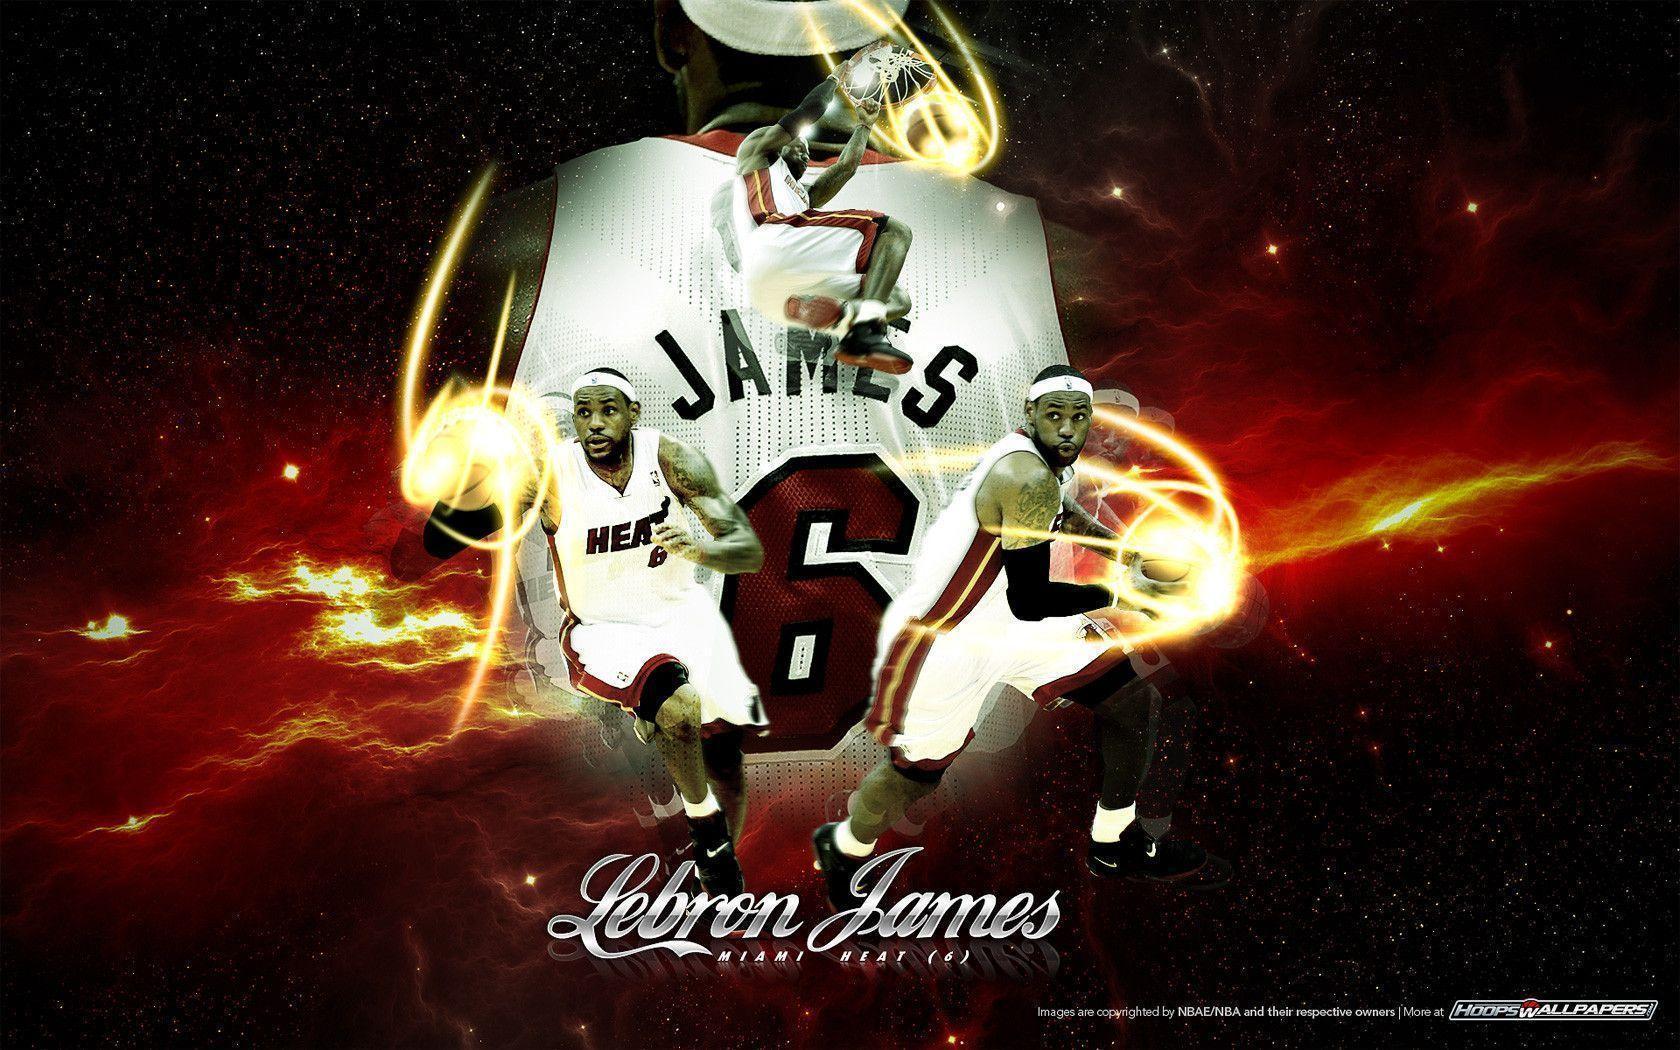 LeBron James Miami Heat Best HD Wallpaper. The Wallpaper 9